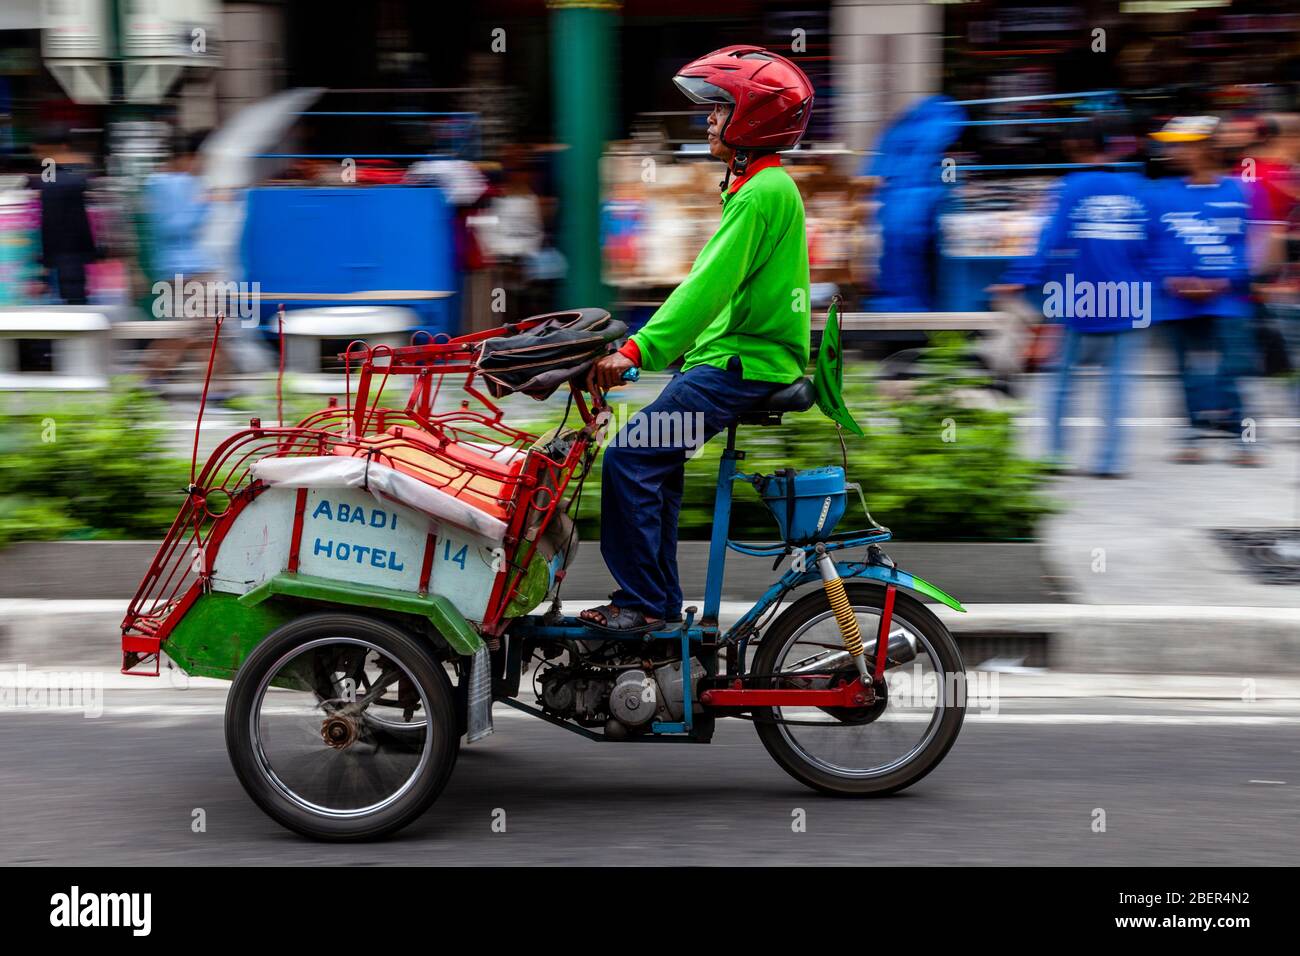 A Motorcycle Taxi, Malioboro Street, Yogyakarta, Indonesia. Stock Photo